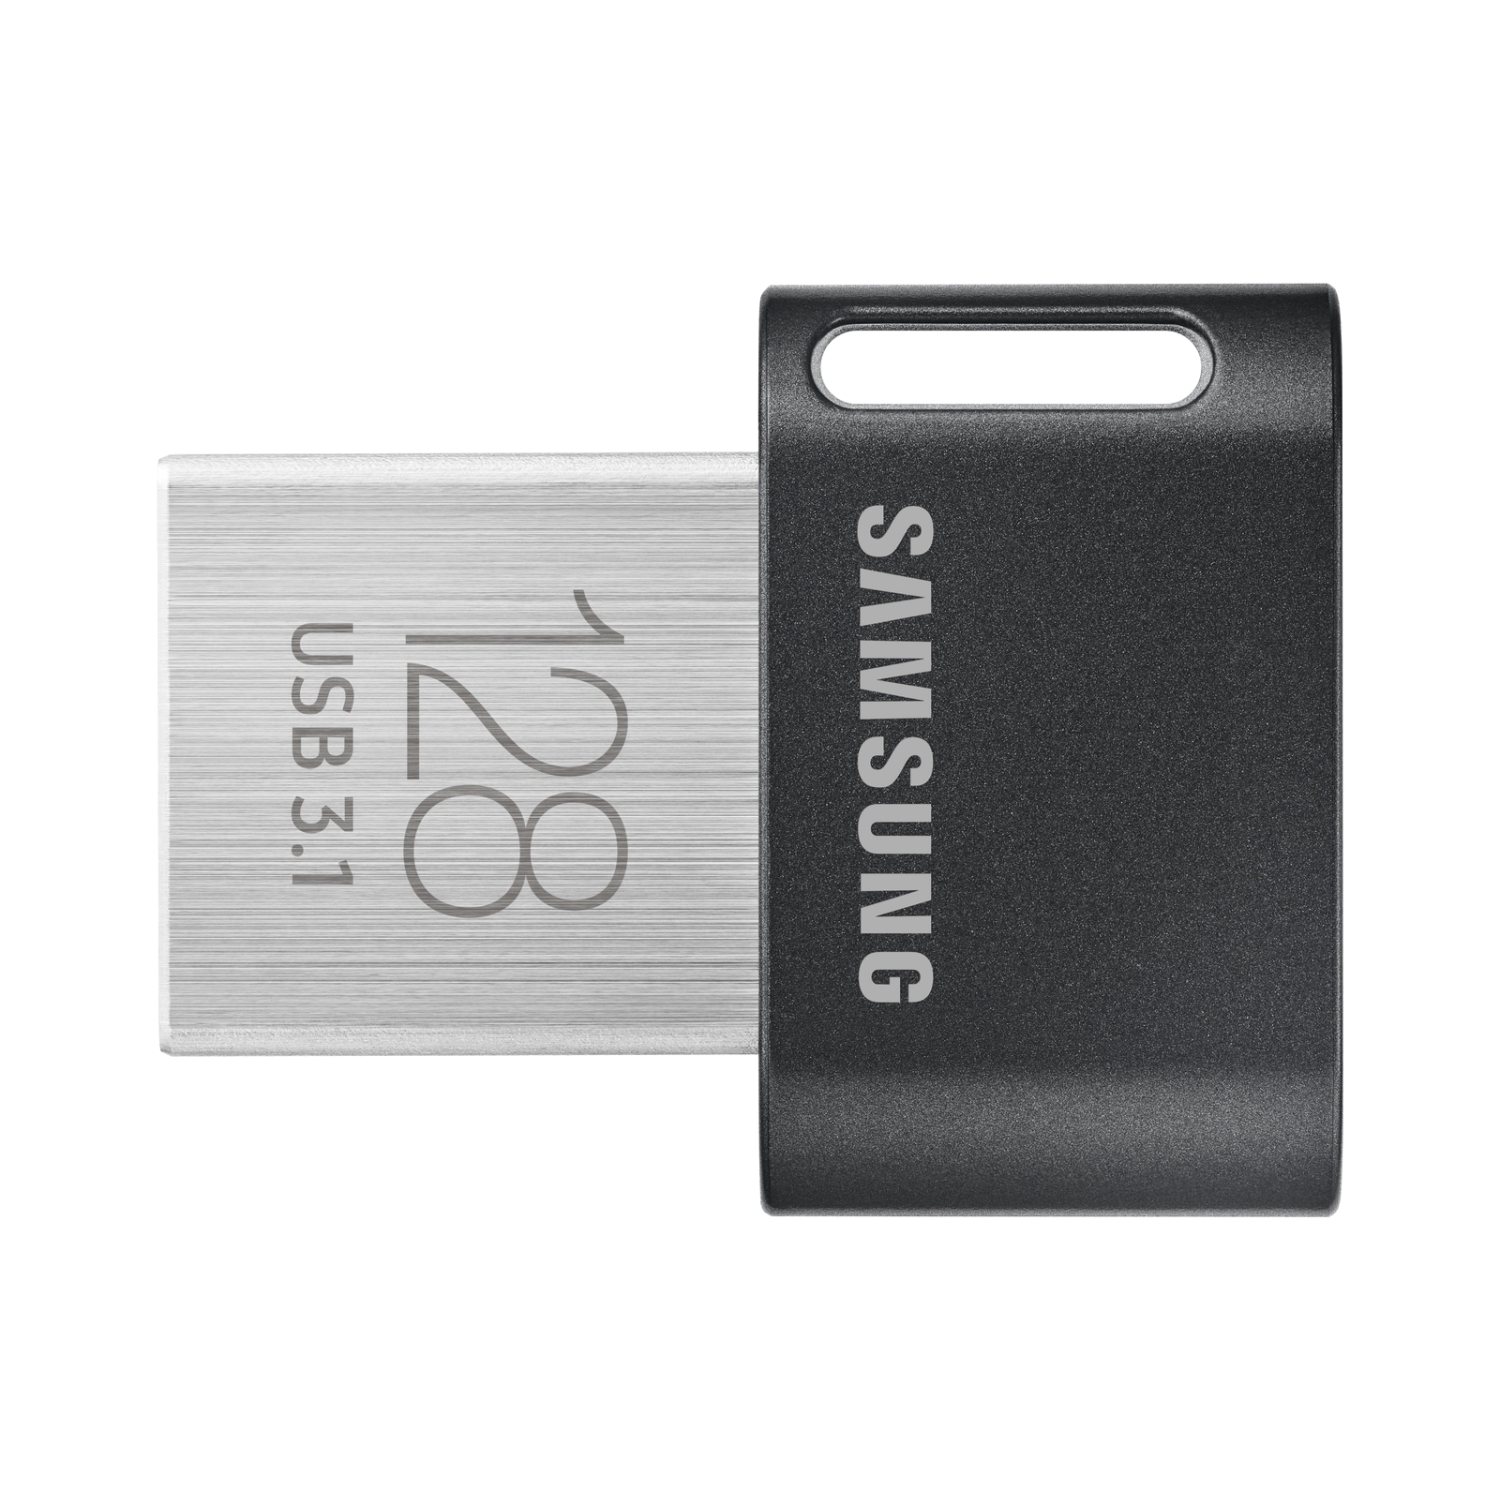 Samsung FIT Plus 128GB USB 3.1 Flash Drive up to 400MB/s (MUF-128AB)